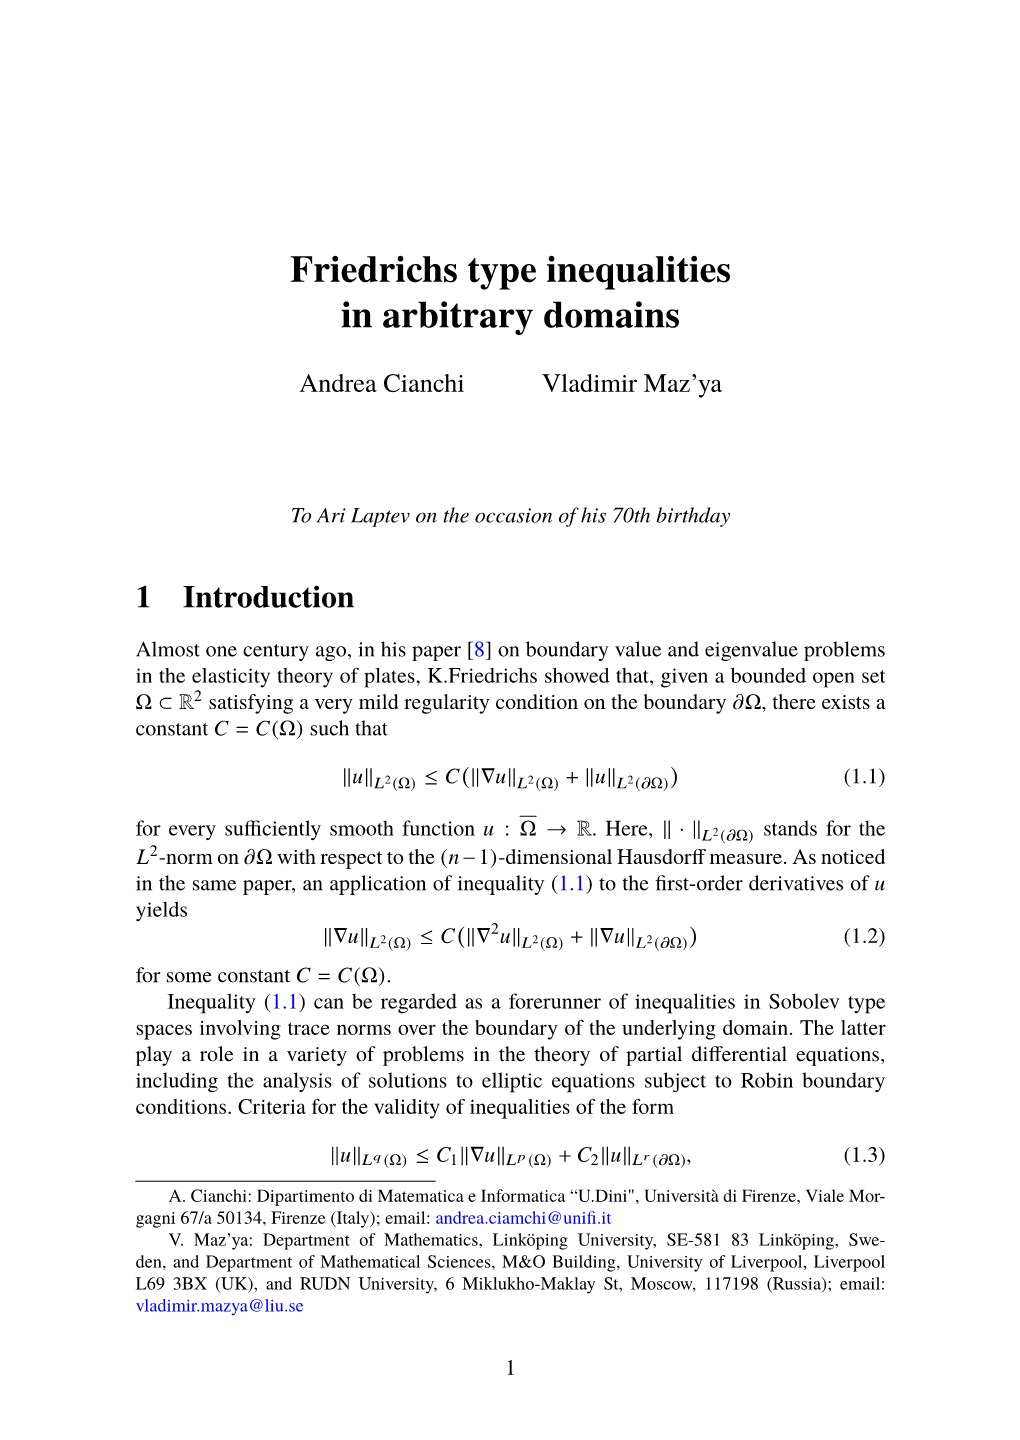 Friedrichs Type Inequalities in Arbitrary Domains